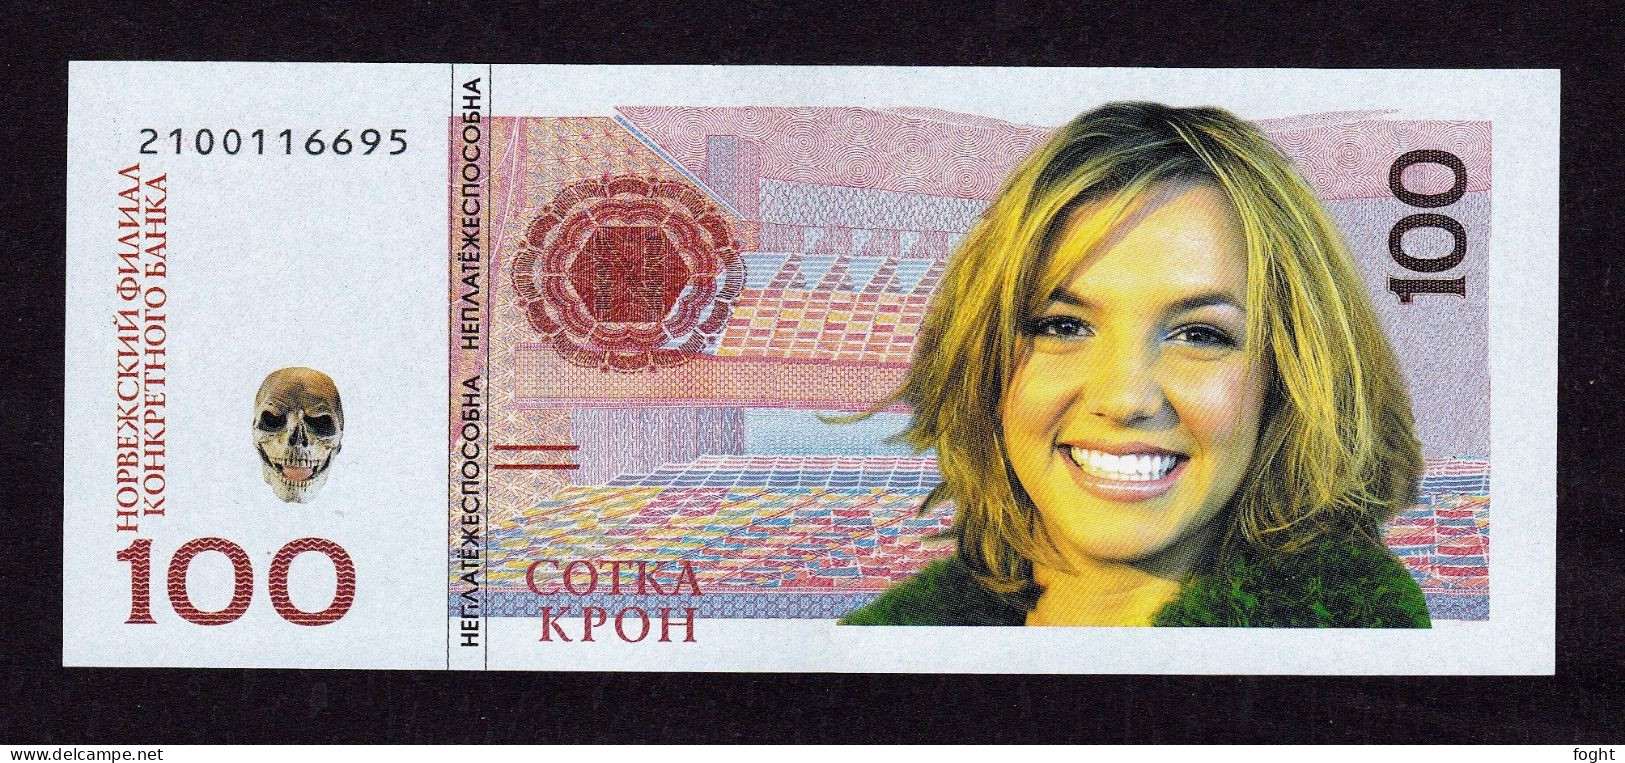 2000 Russia Souvenir Bill Norwegian Branch Of A "Powerful Bank" 100 Norvegian Kronen - Russia